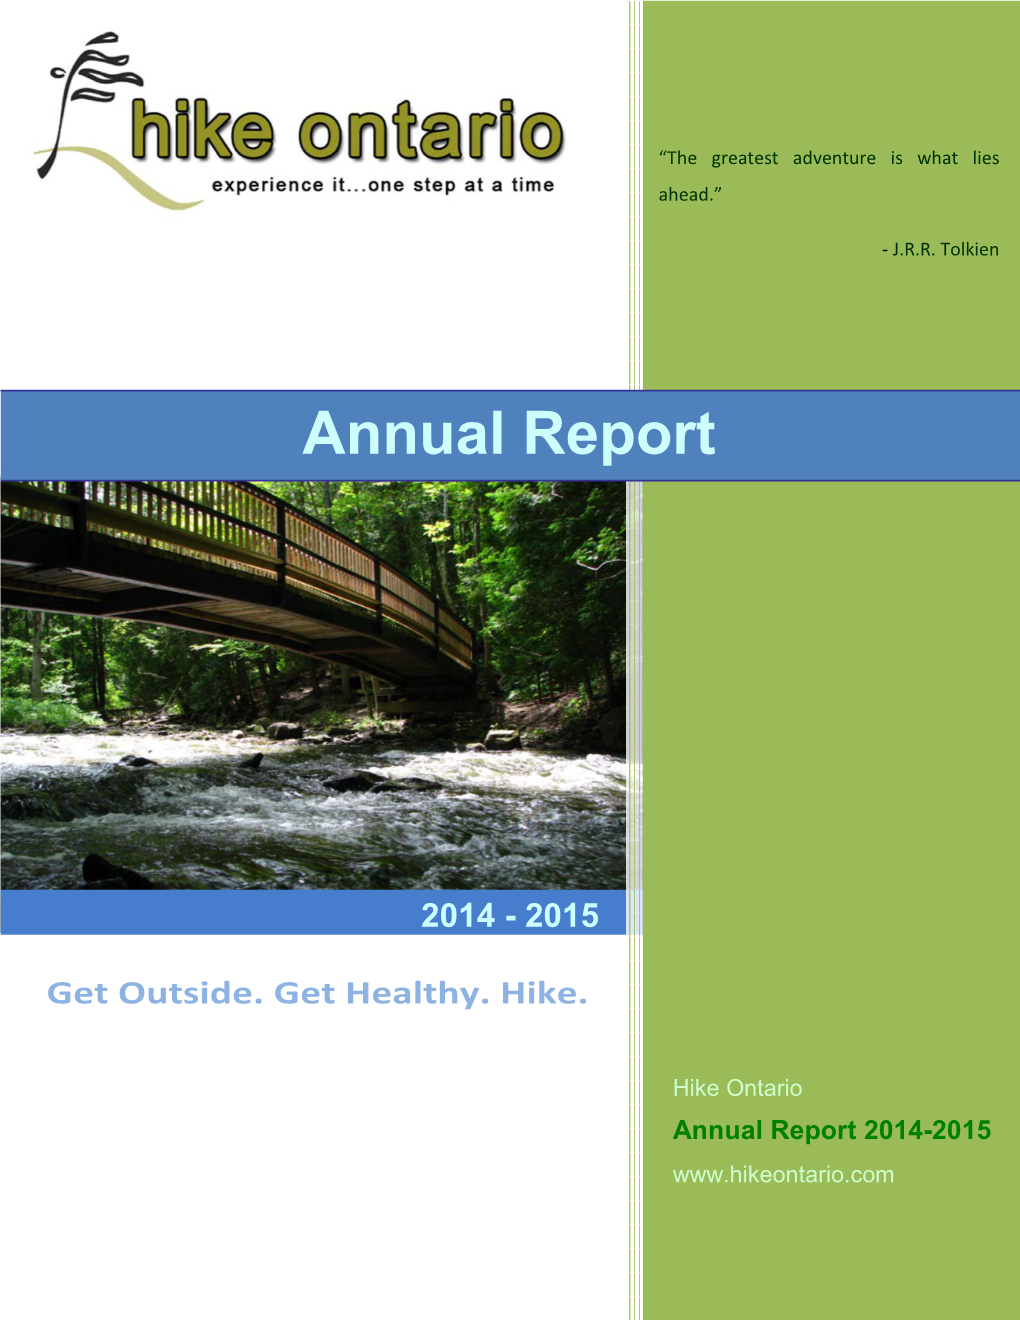 Hike Ontario 2014-2015 Annual Report